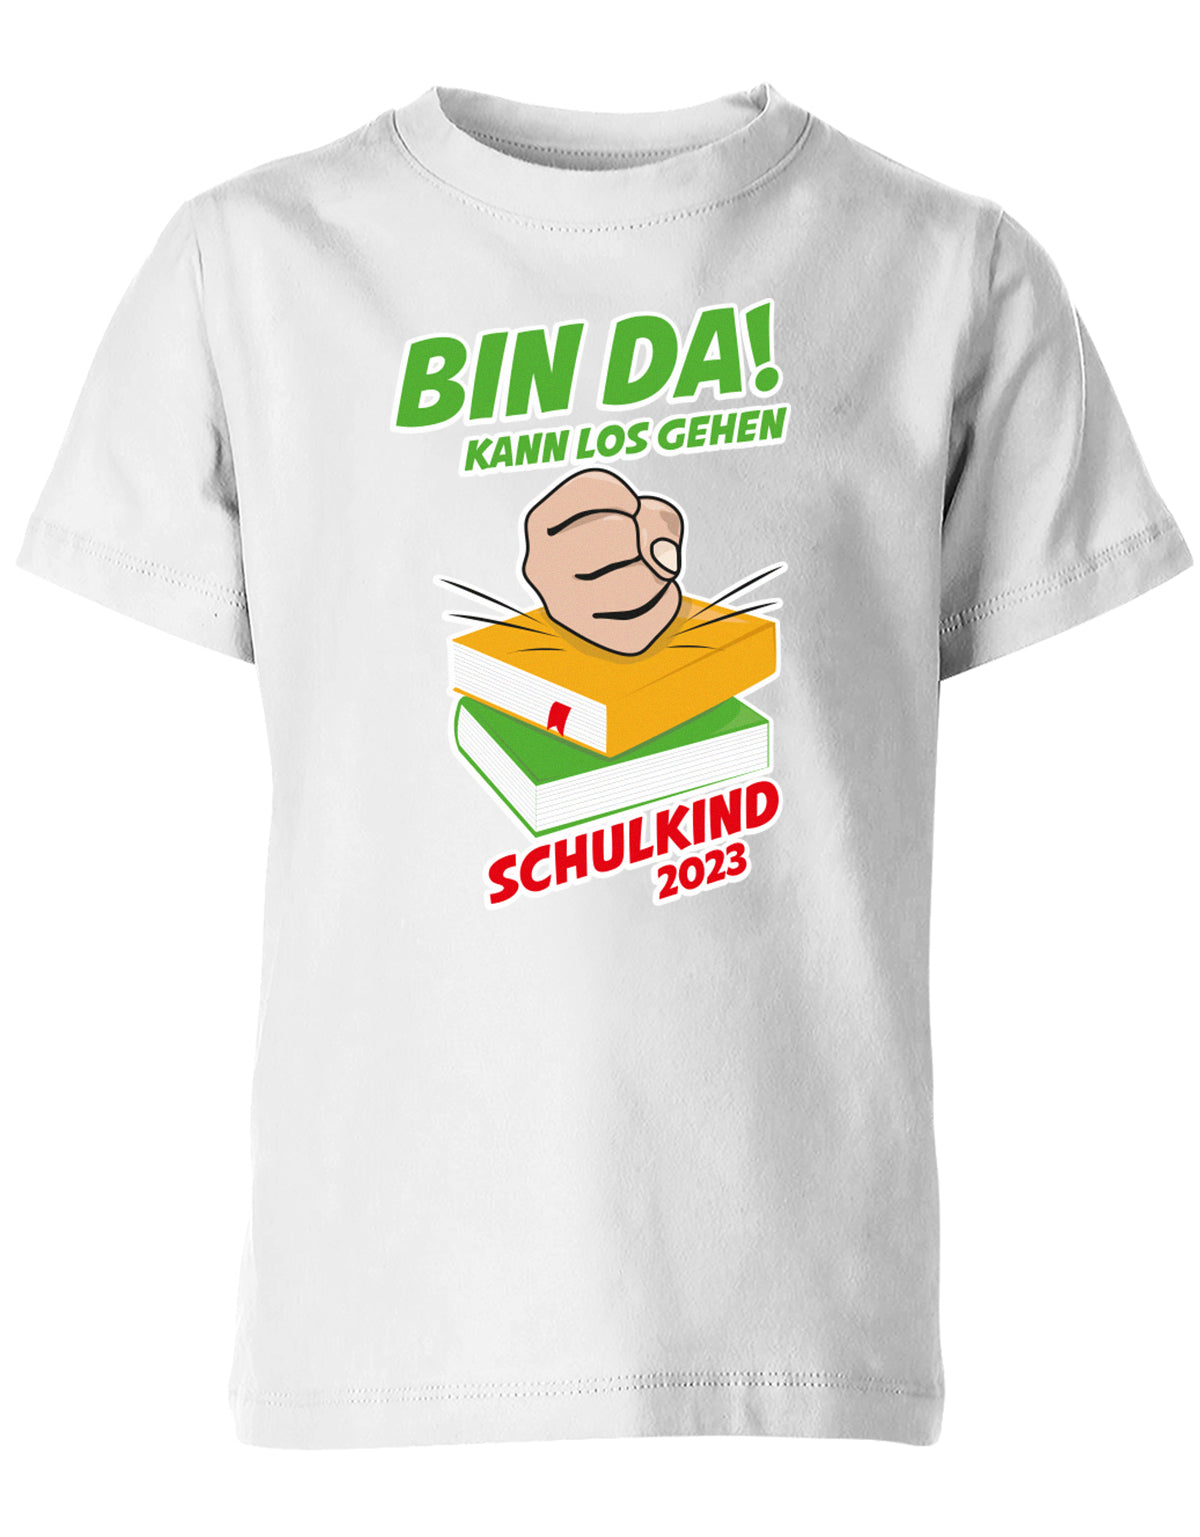 Bin Da kann los gehen Faust auf Bücher Schulkind 2023 - Einschulung Kinder T Shirt Weiss